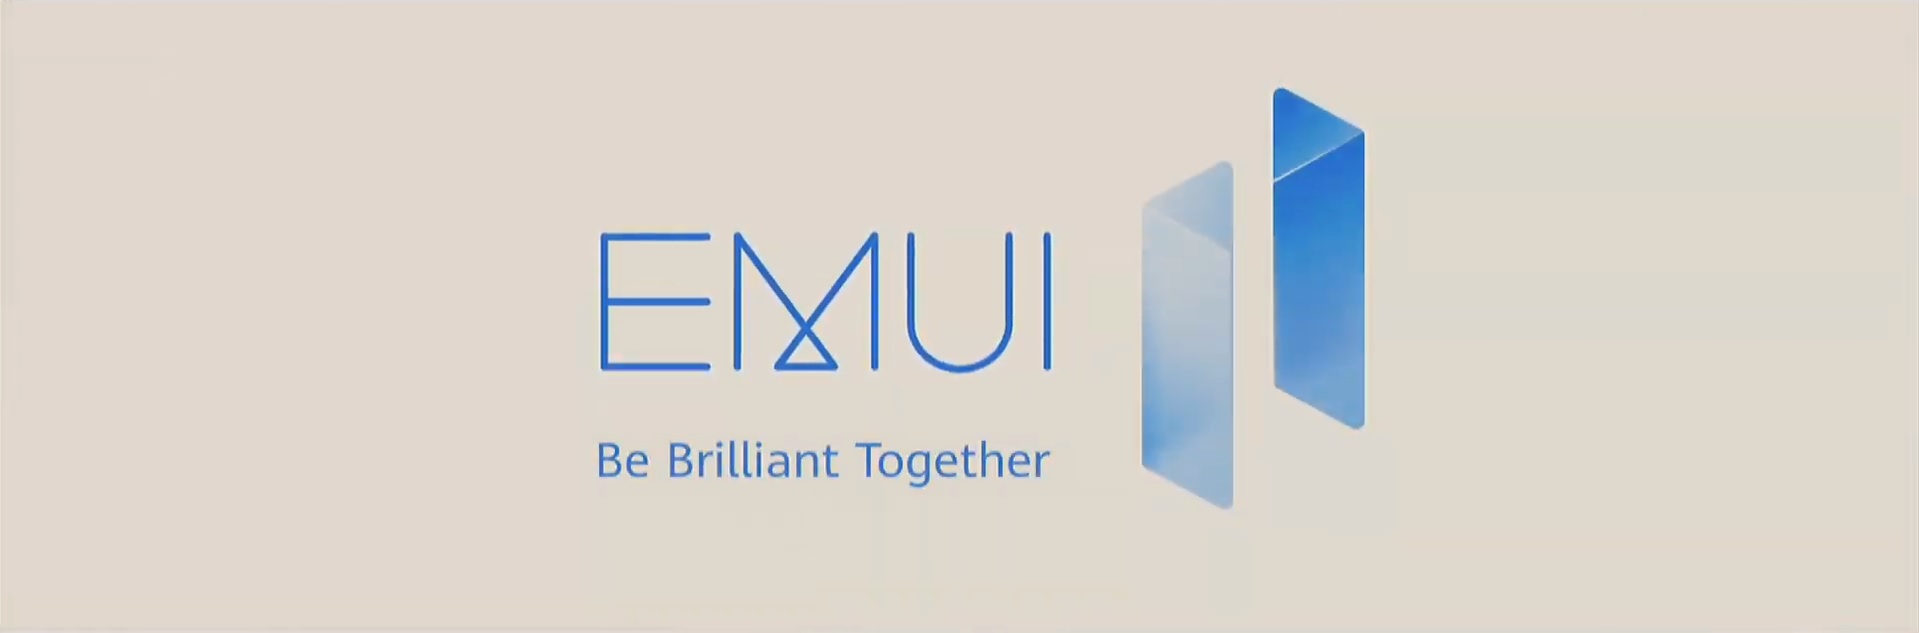 Huawei EMUI 11 logo